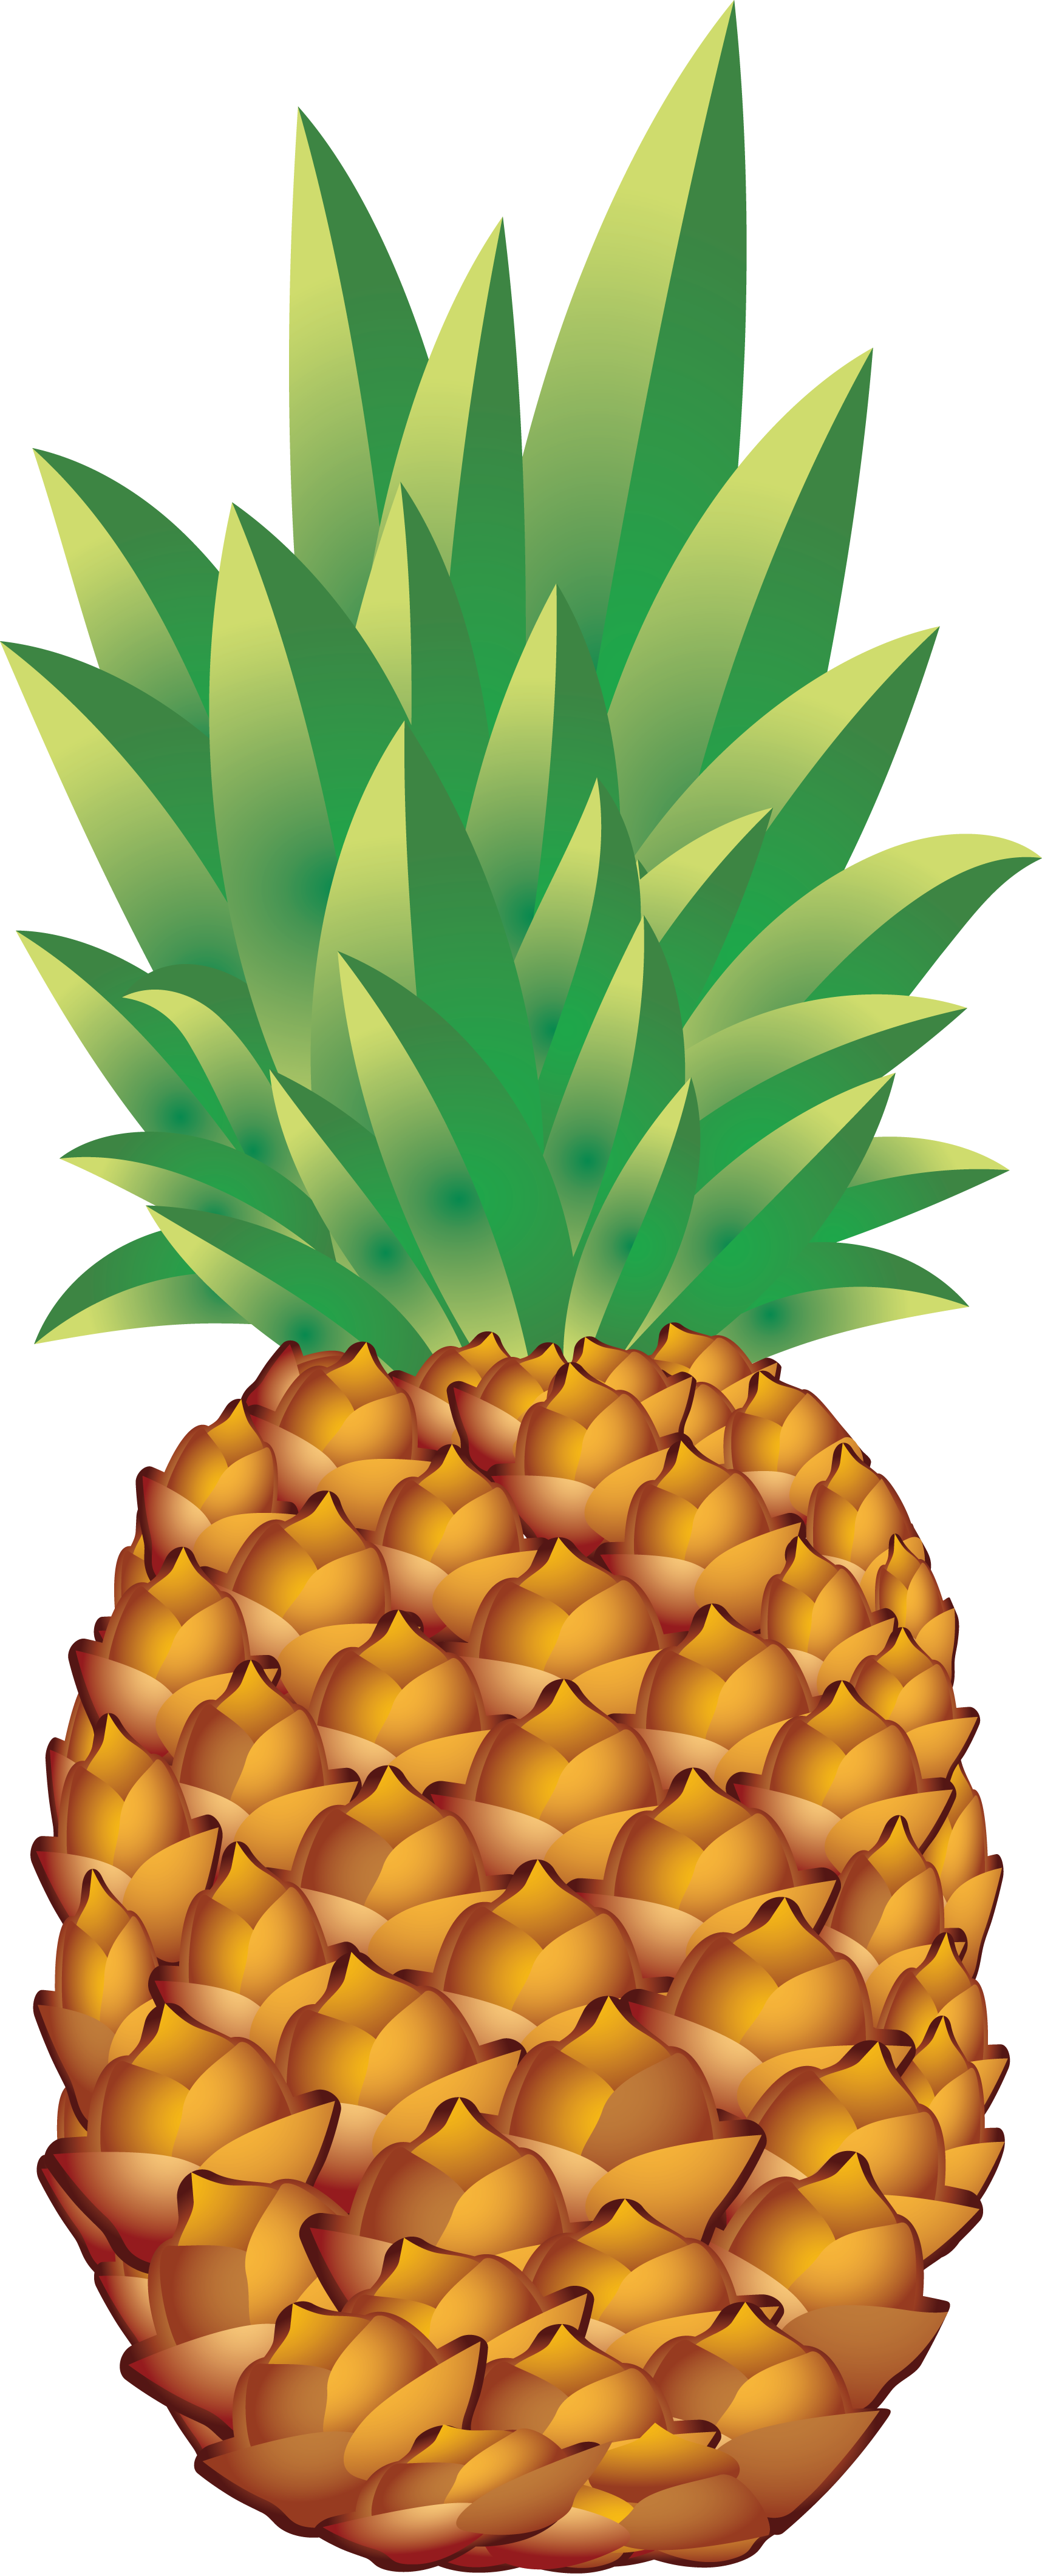 Ananas Download PNG Image